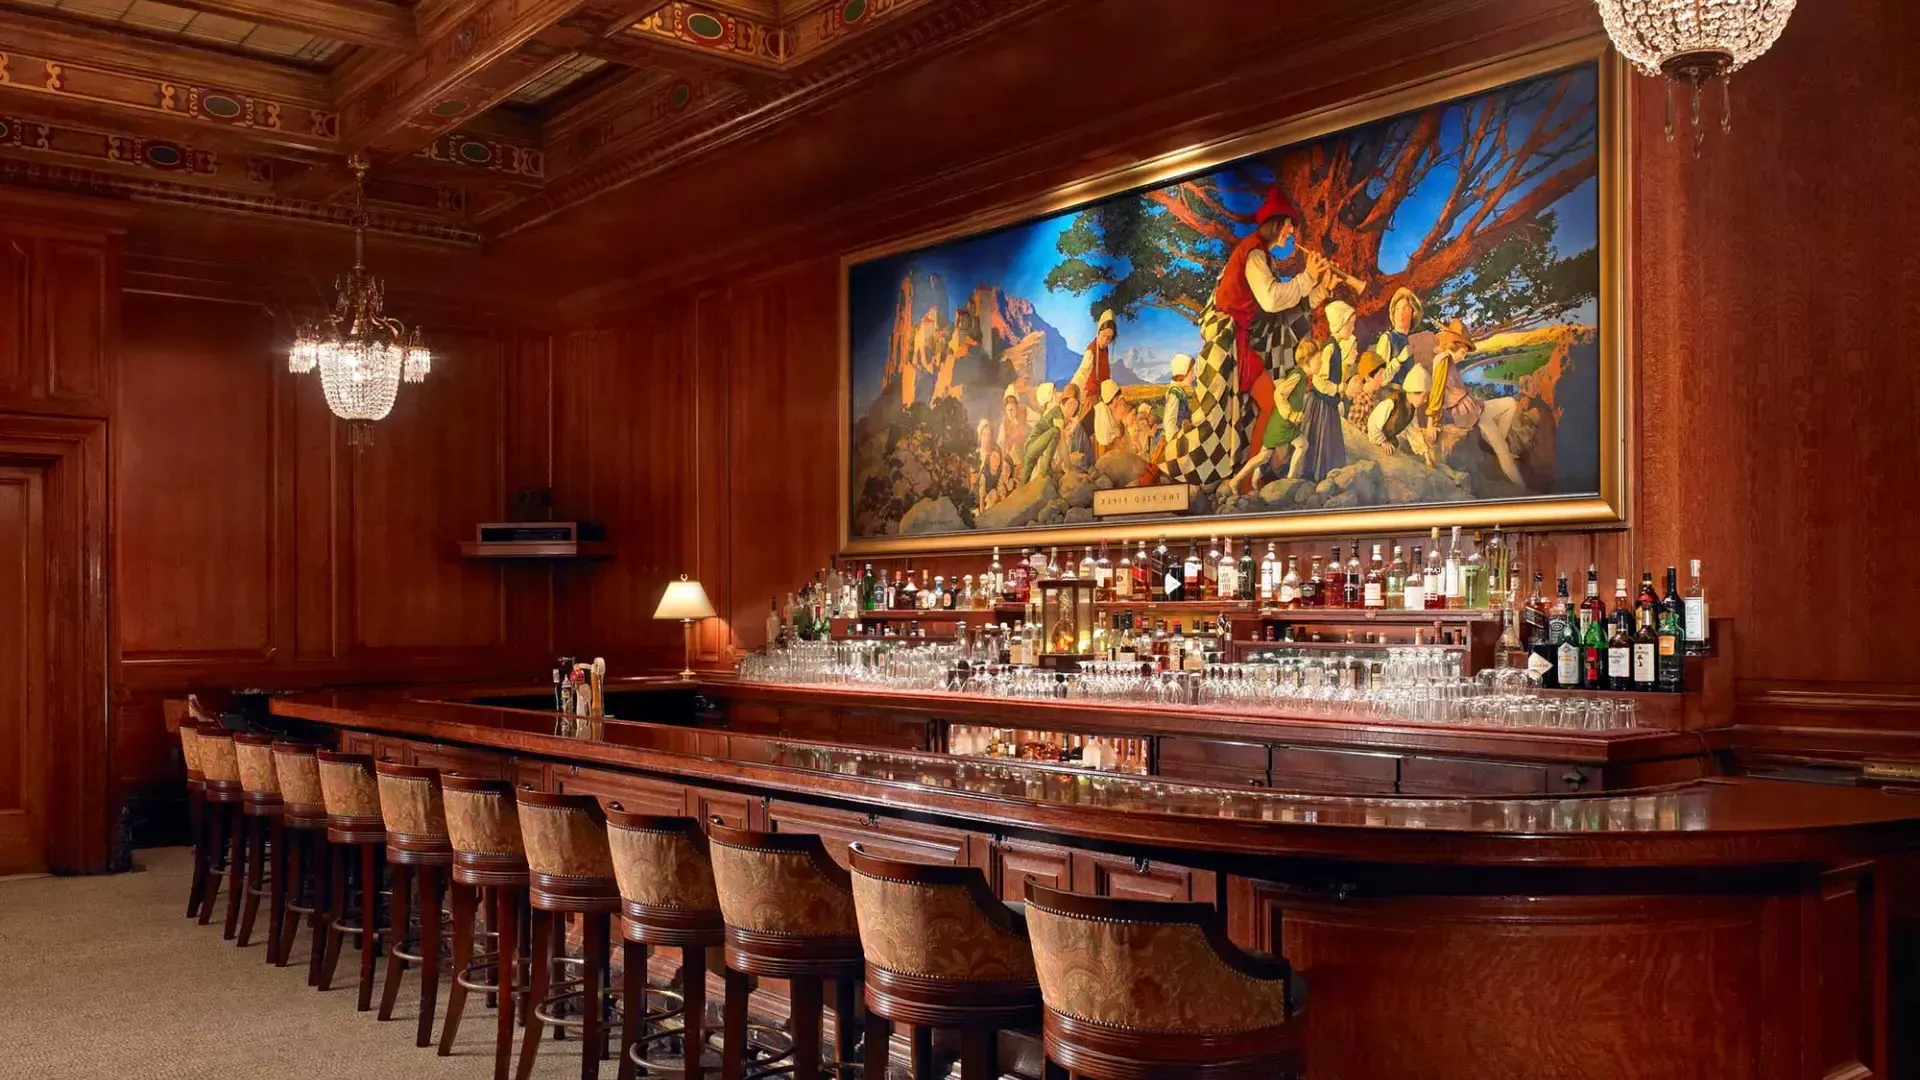 The bar at the Palace Hotel, 它的特色是木板墙和一幅名为《哈默林的魔笛手》的画作.